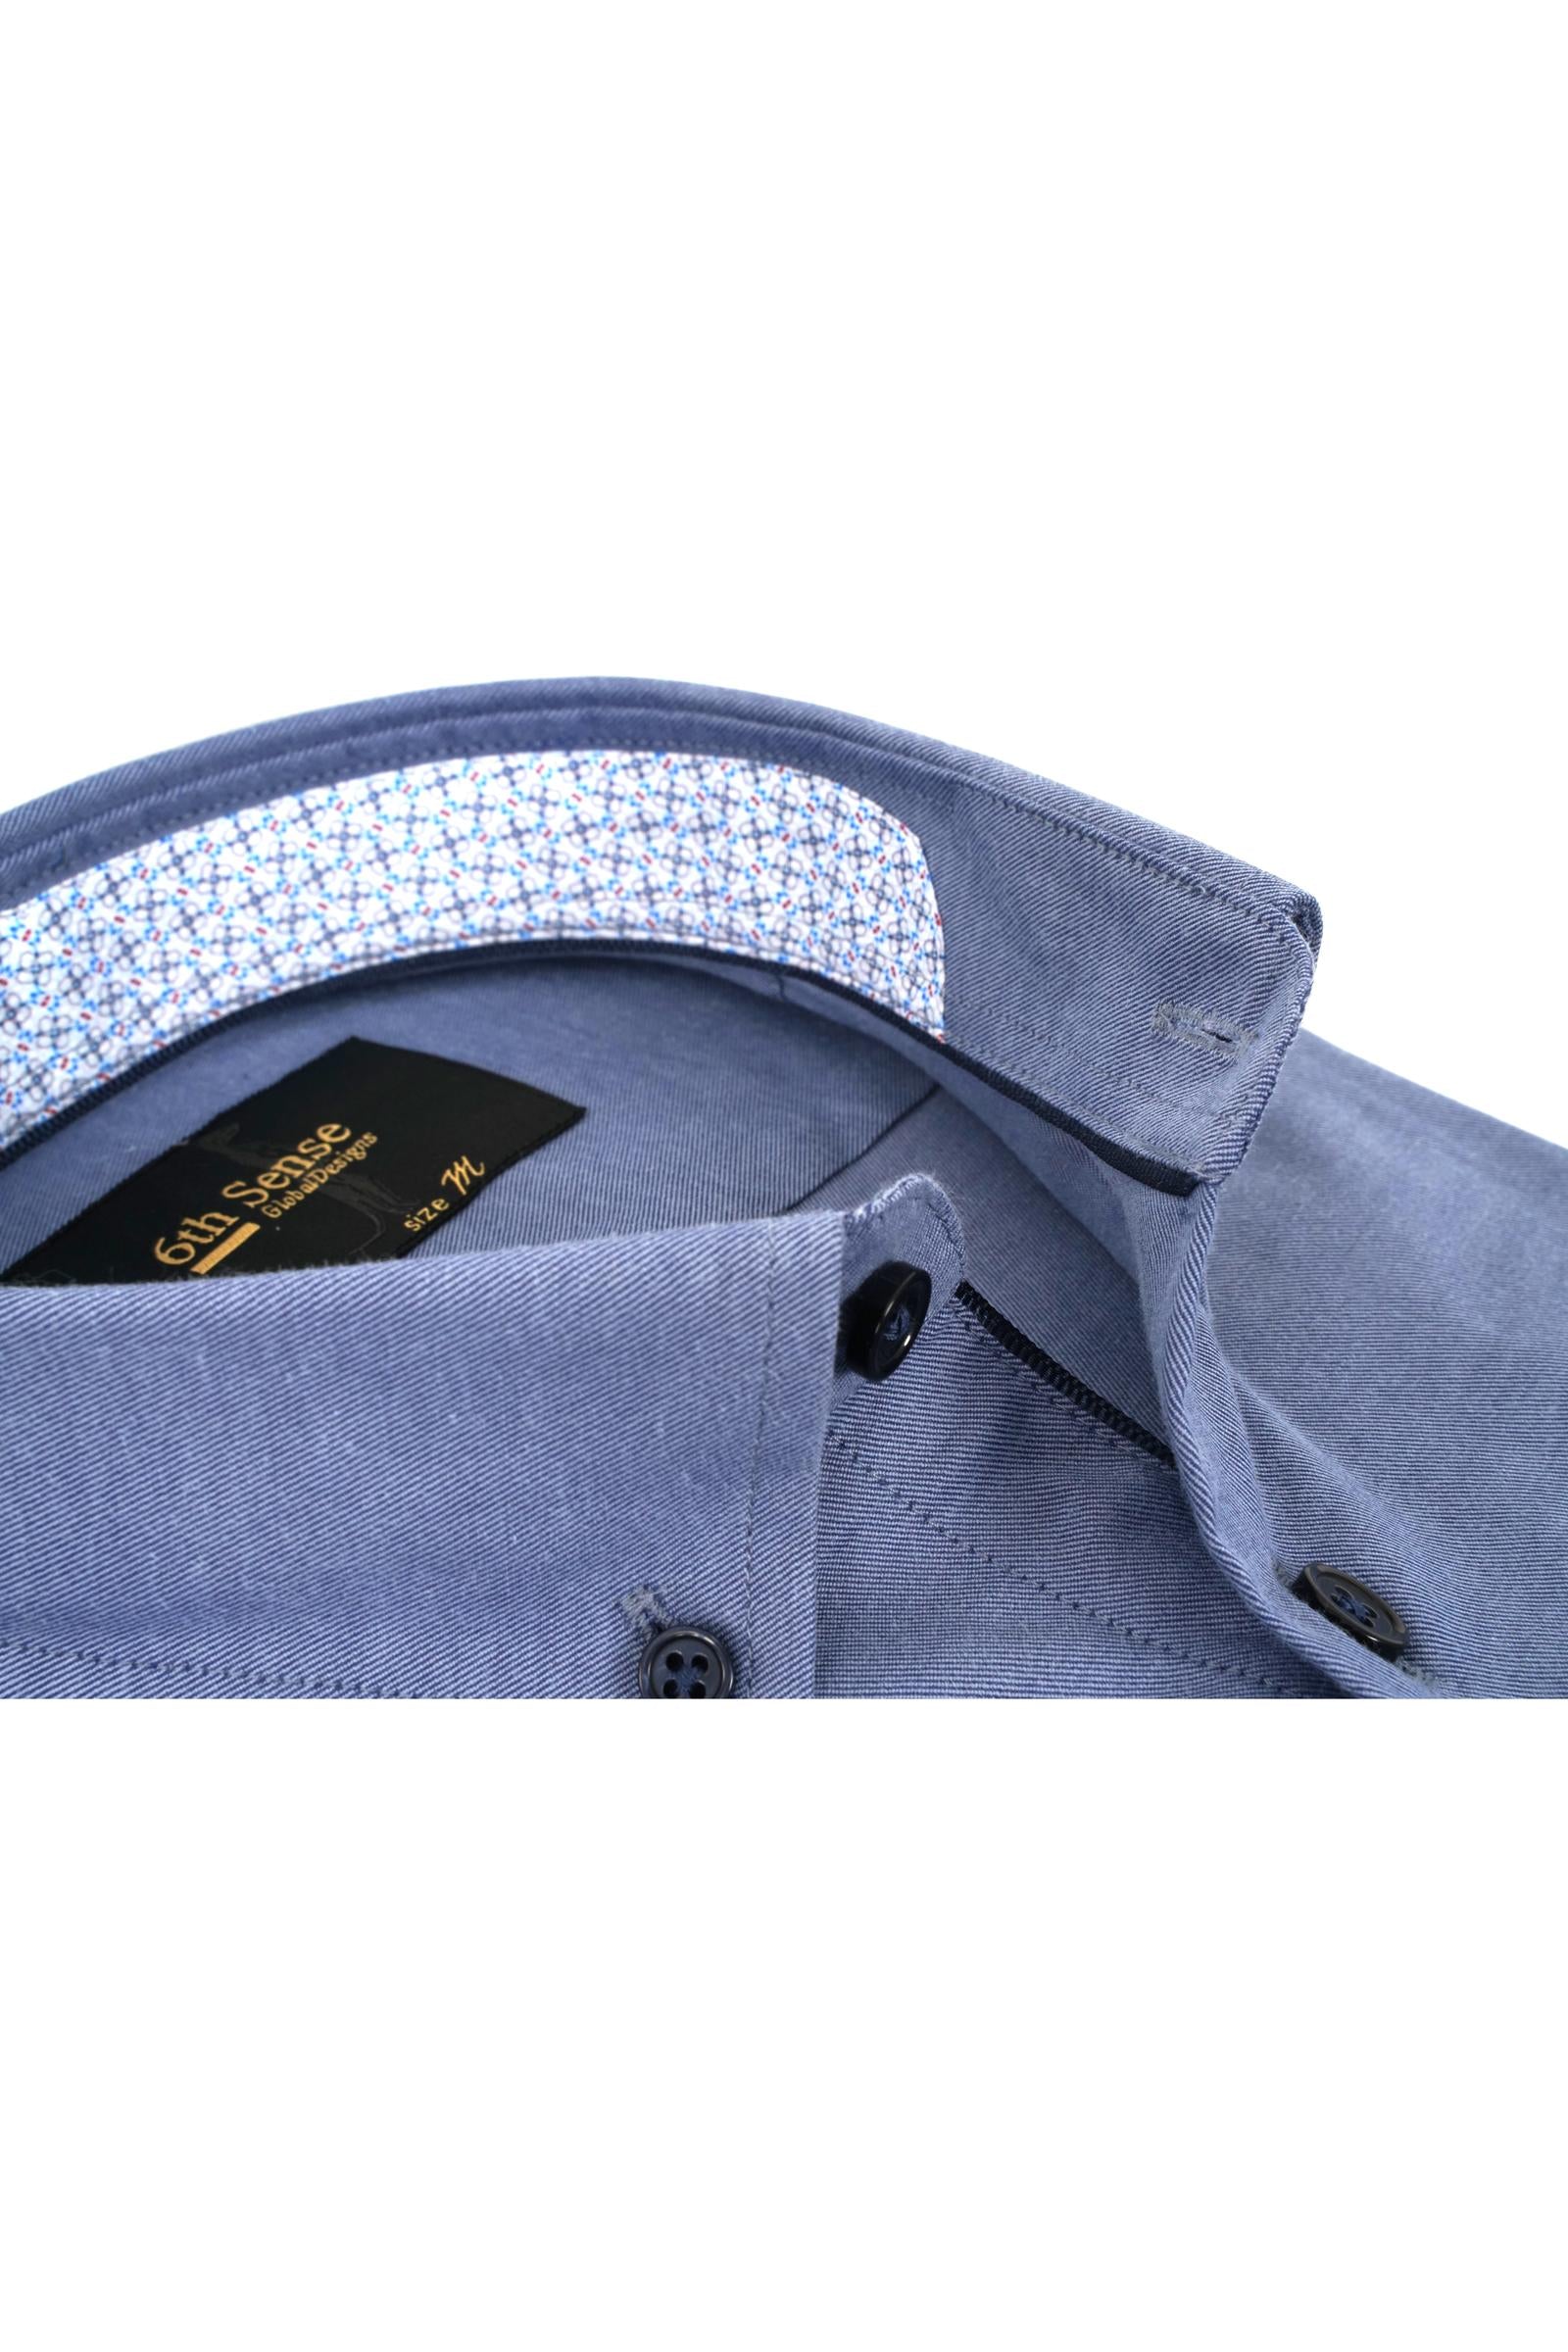 Button Down Dark Blue Shirt-Collar view